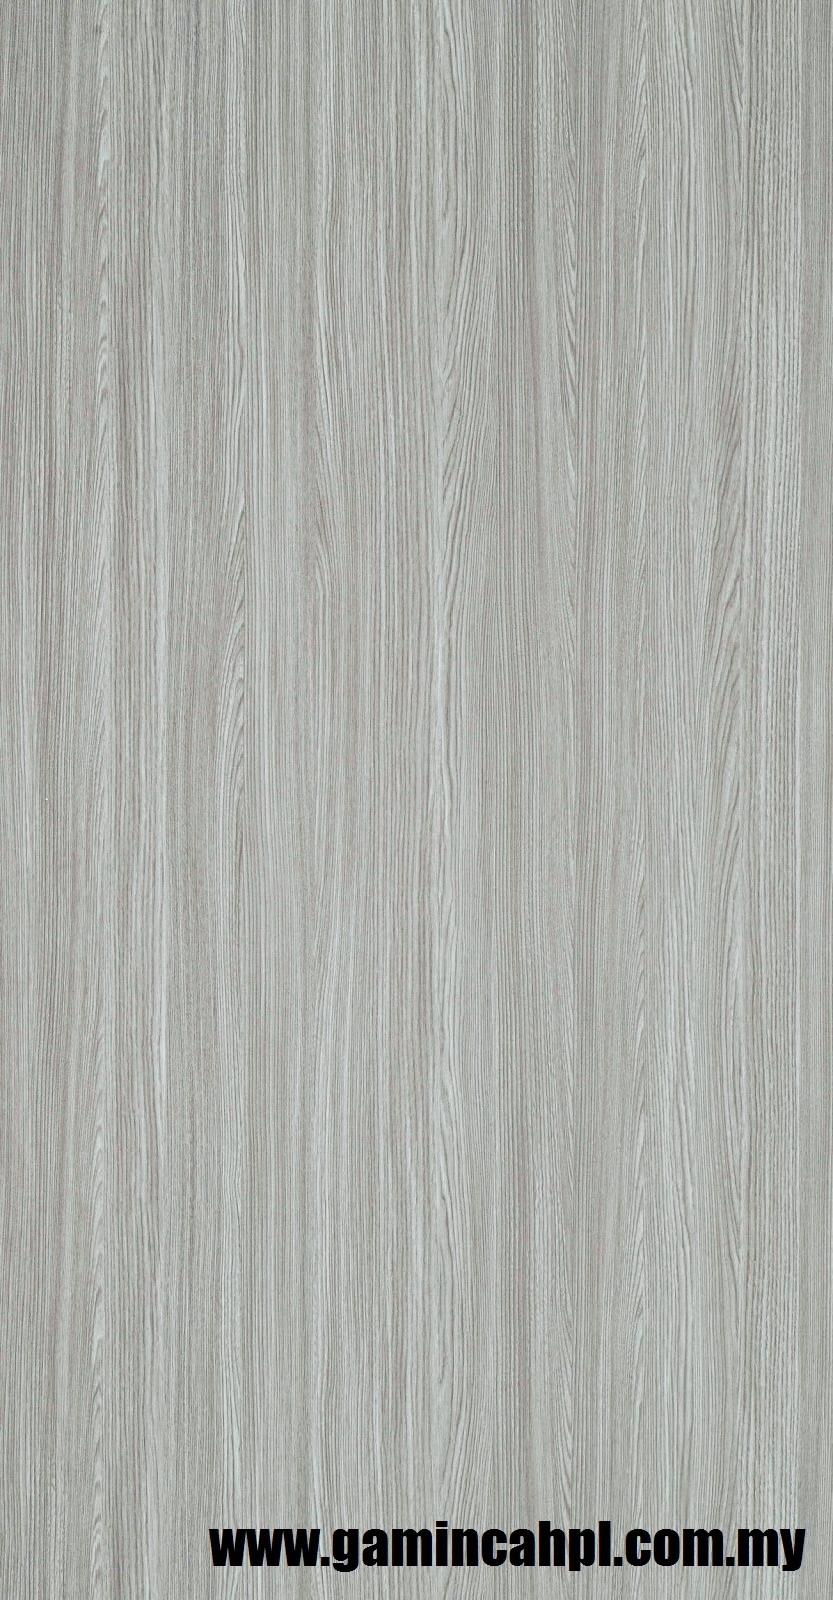 GM11-2480 PRIMARY ASH Authentic Wood Series Laminate Flooring Choose Sample / Pattern Chart